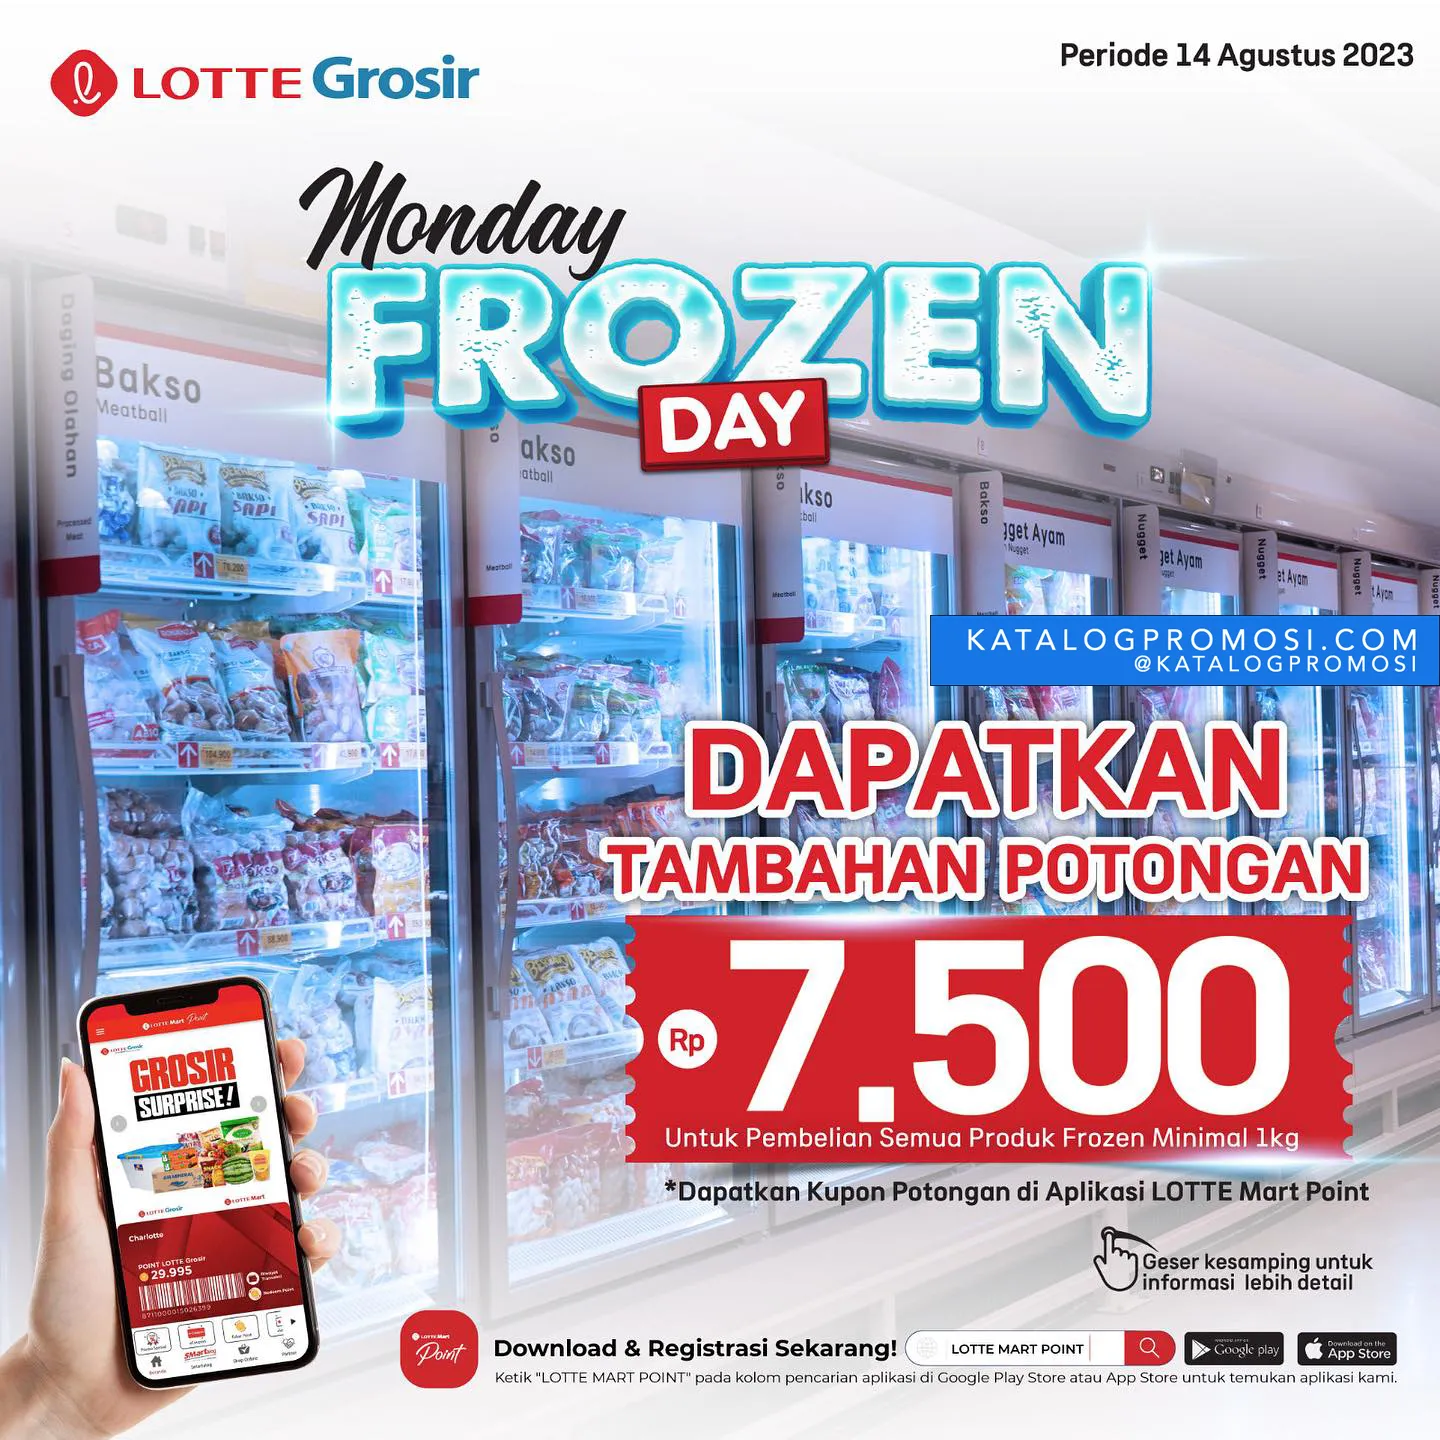 Promo LOTTE GROSIR Monday Frozen Day - Dapatkan tambahan potongan Rp 7.500